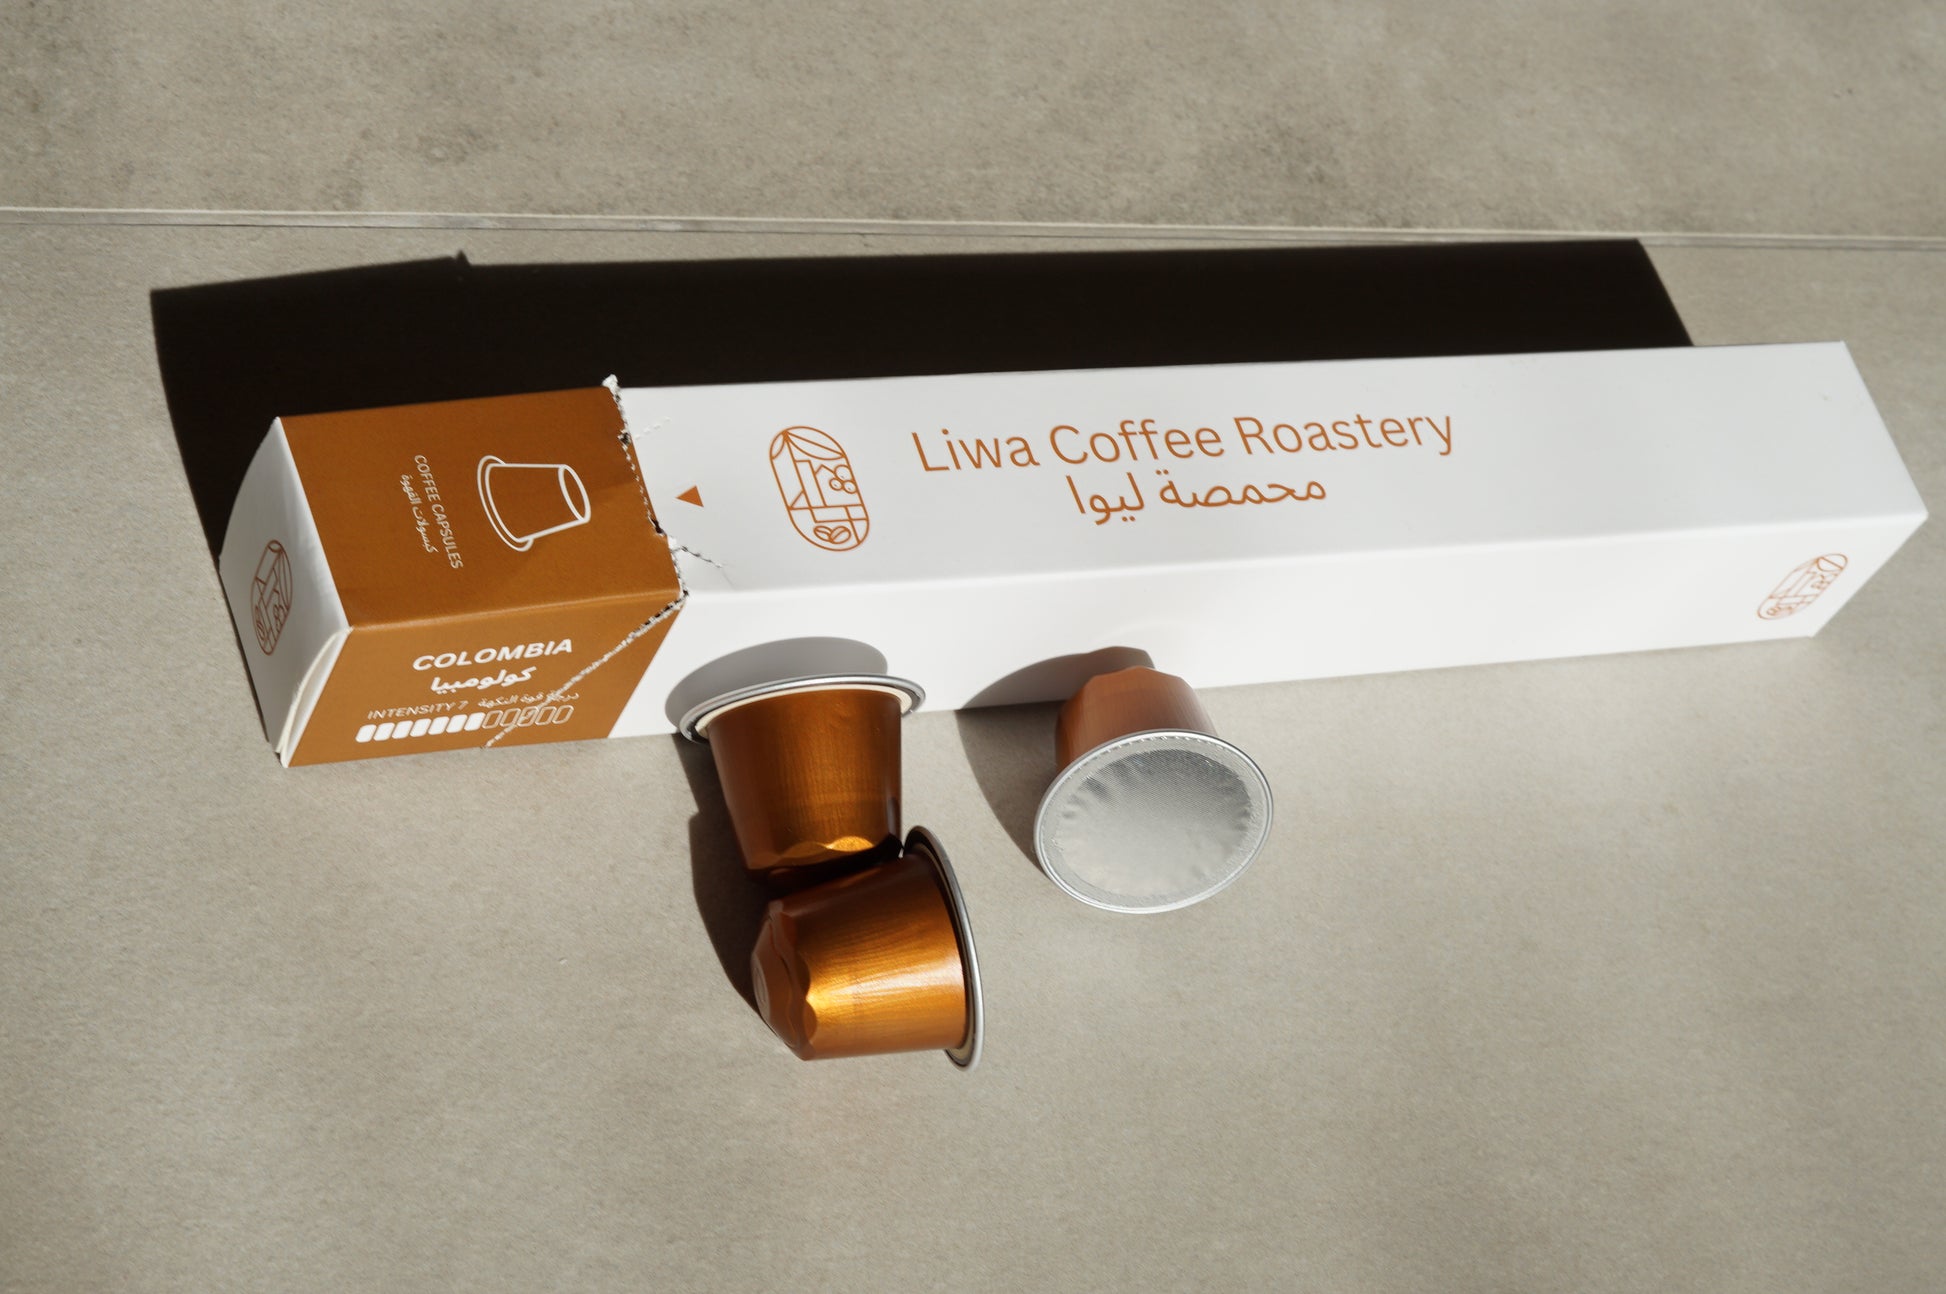 Liwa Coffee Roastery
Specialty Coffee
Coffee Capsules